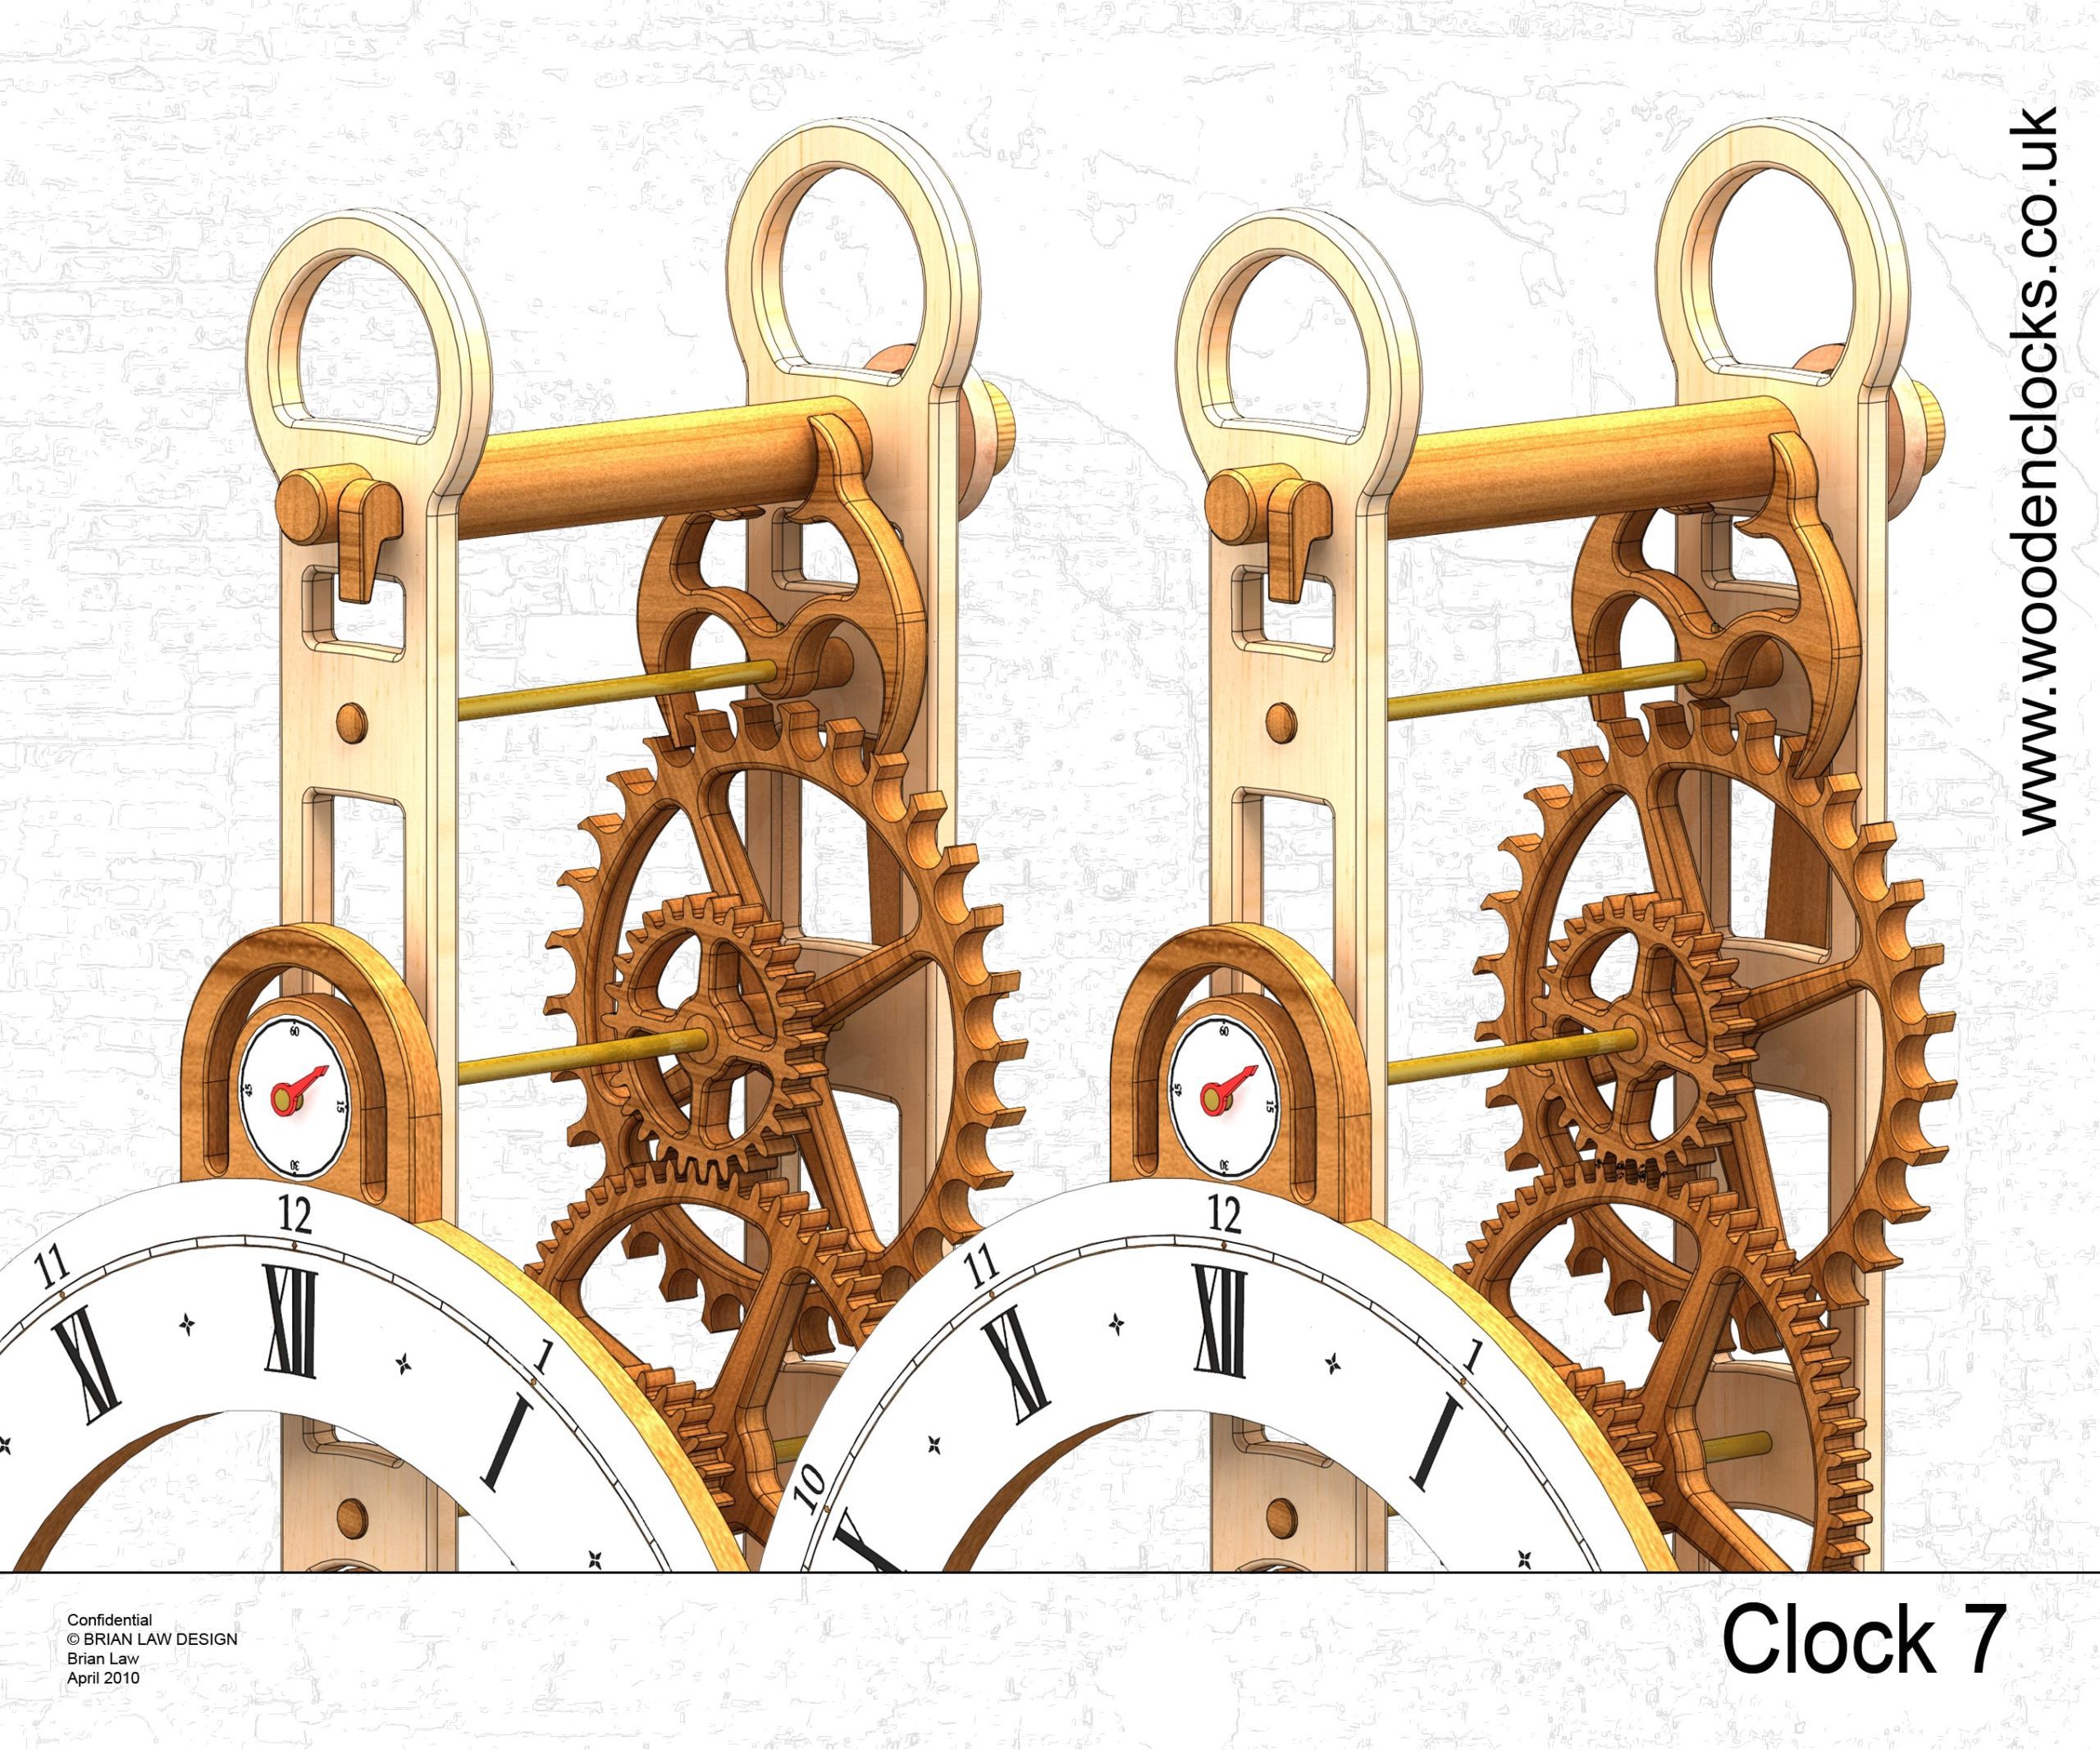 Clock 7 it is an in-line gear train - Brian Law's Woodenclocks